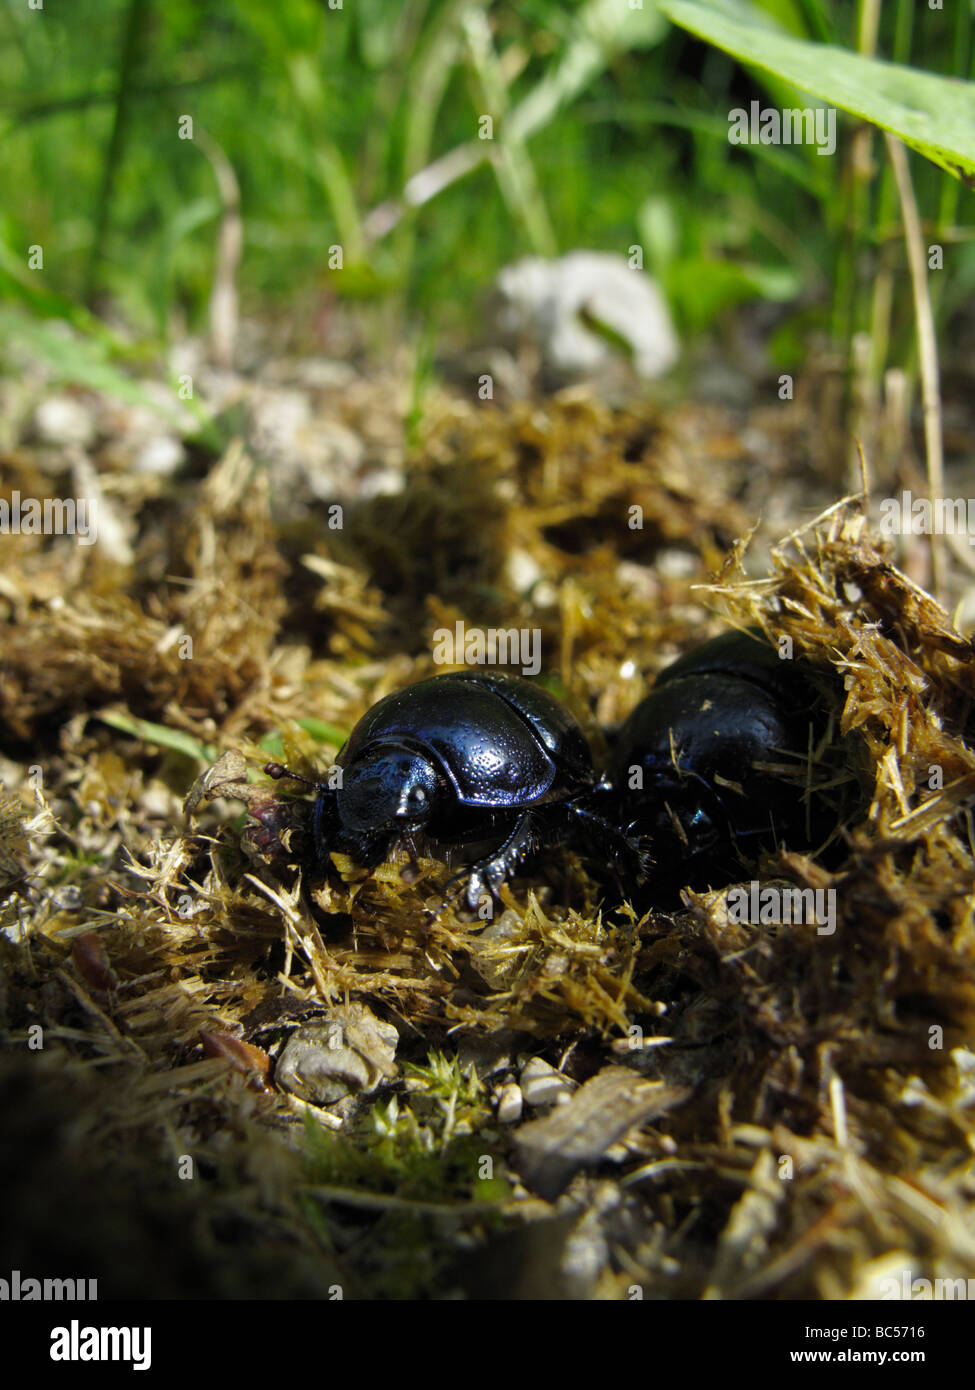 Dor-Käfer (Geotrupes Stercorarius oder Anoplotrupes Stercorosus) Graben in Pferdemist. Stockfoto